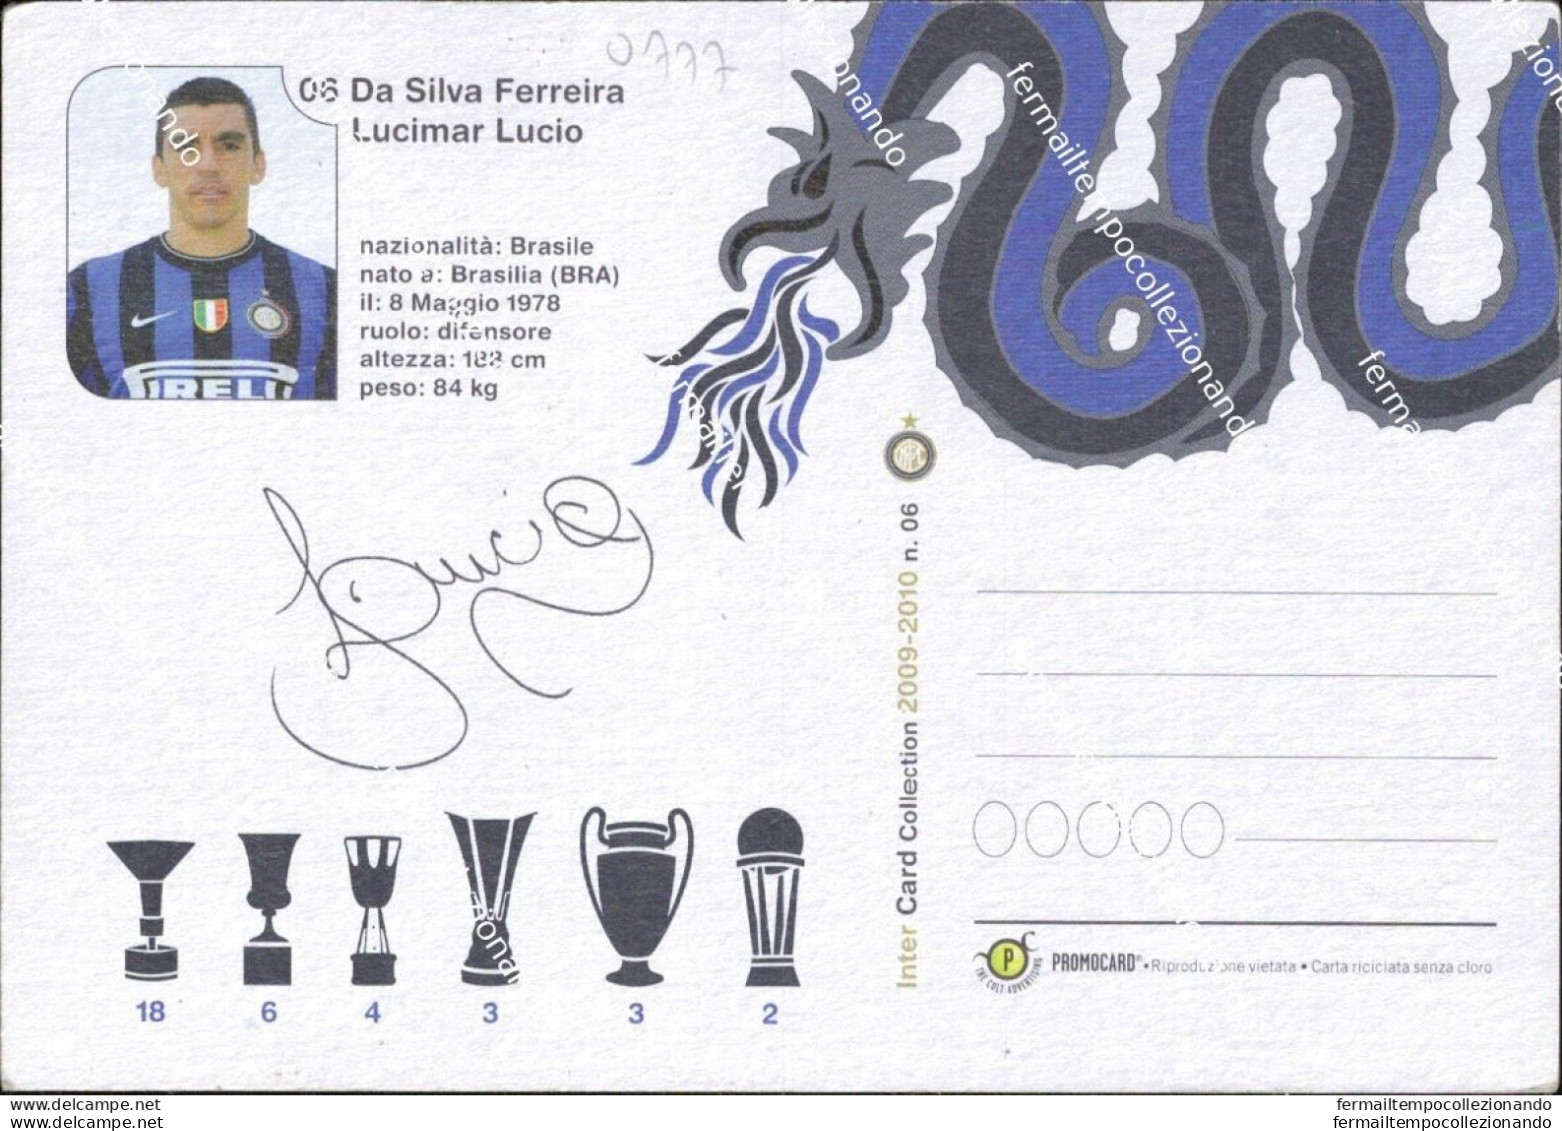 O777 Cartolina  Postcard  Ufficiale Inter Da Silva Ferreira - Soccer